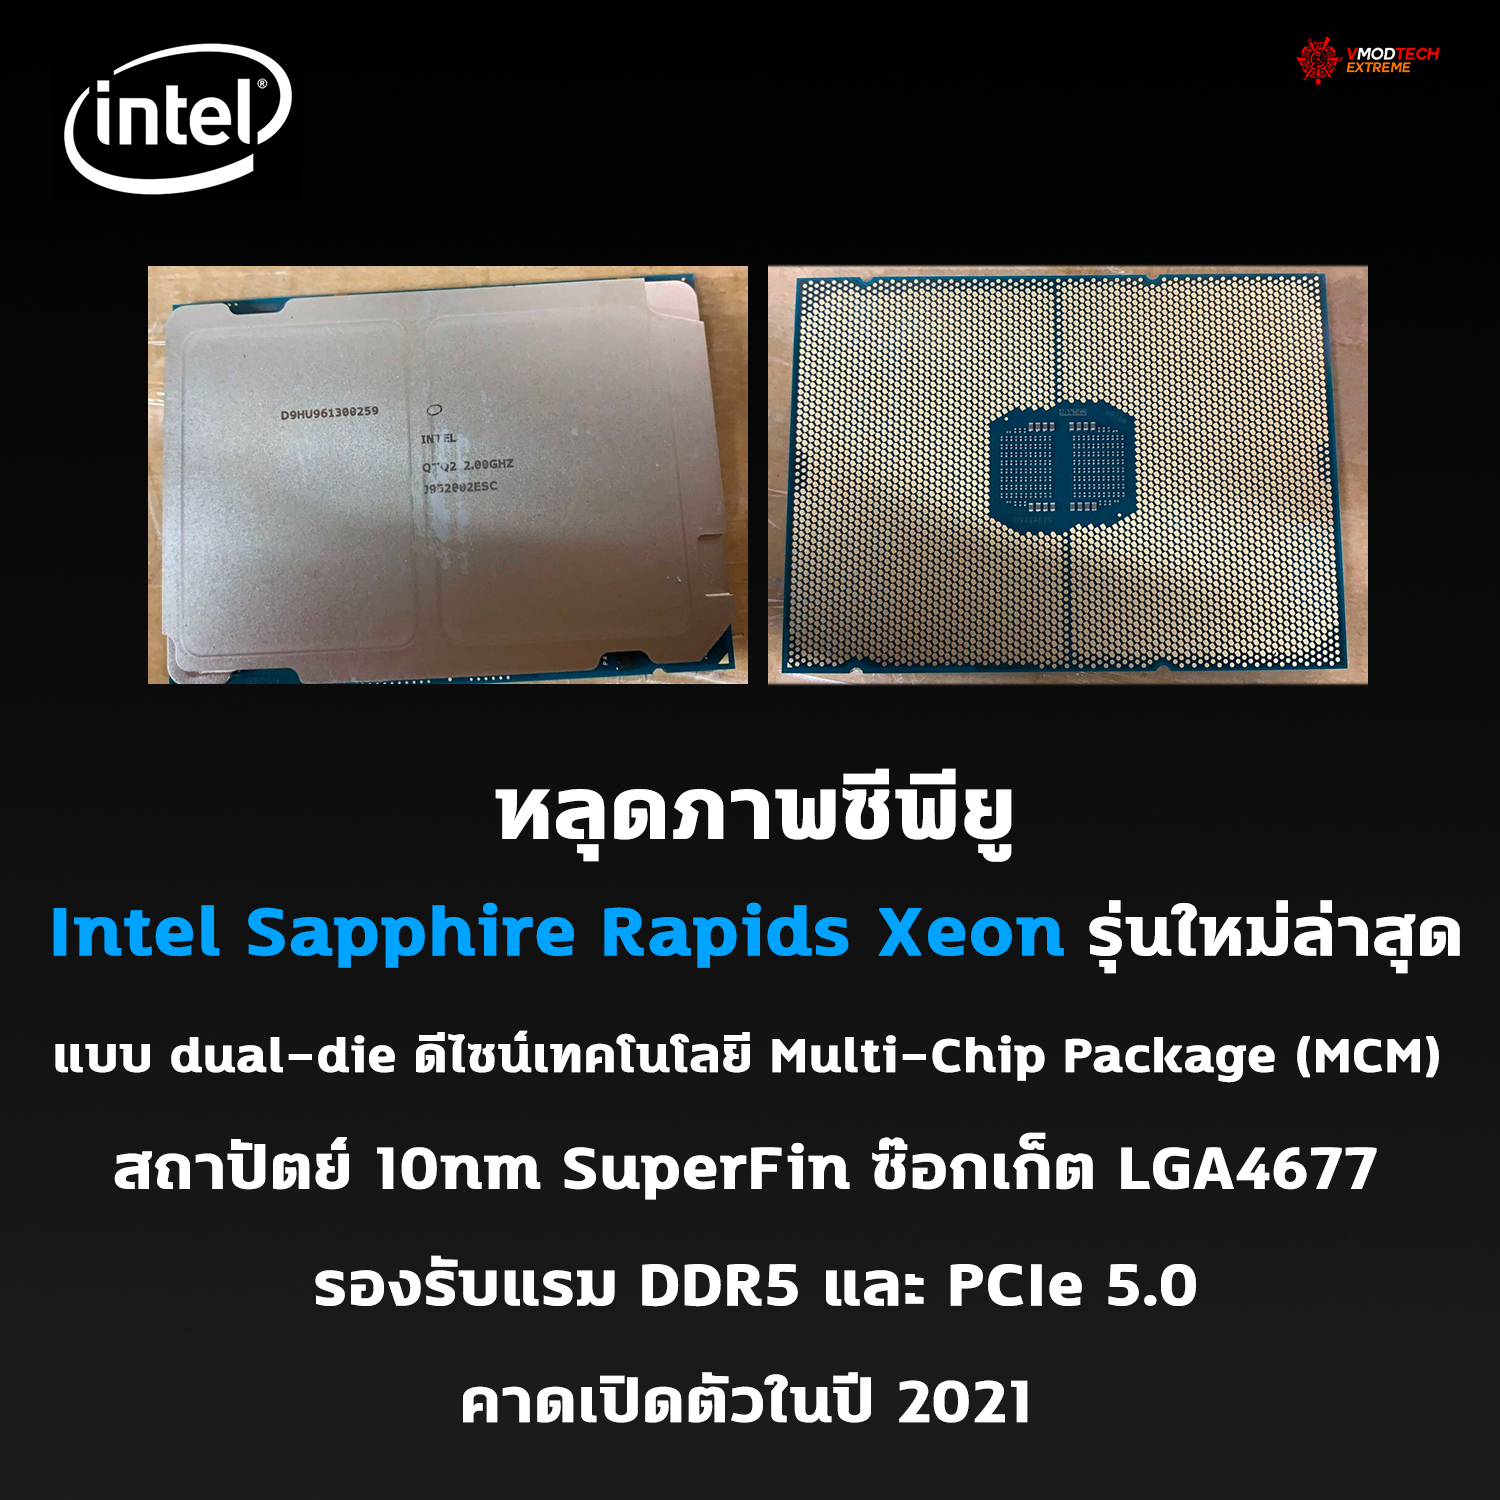 intel sapphire rapids xeon หลุดภาพซีพียู Intel Sapphire Rapids Xeon รุ่นใหม่ล่าสุดแบบ dual die ดีไซน์ ใช้สถาปัตย์ 10nm SuperFin ใช้ซ๊อกเก็ต LGA4677 รองรับแรม DDR5 คาดเปิดตัวในปี 2021 